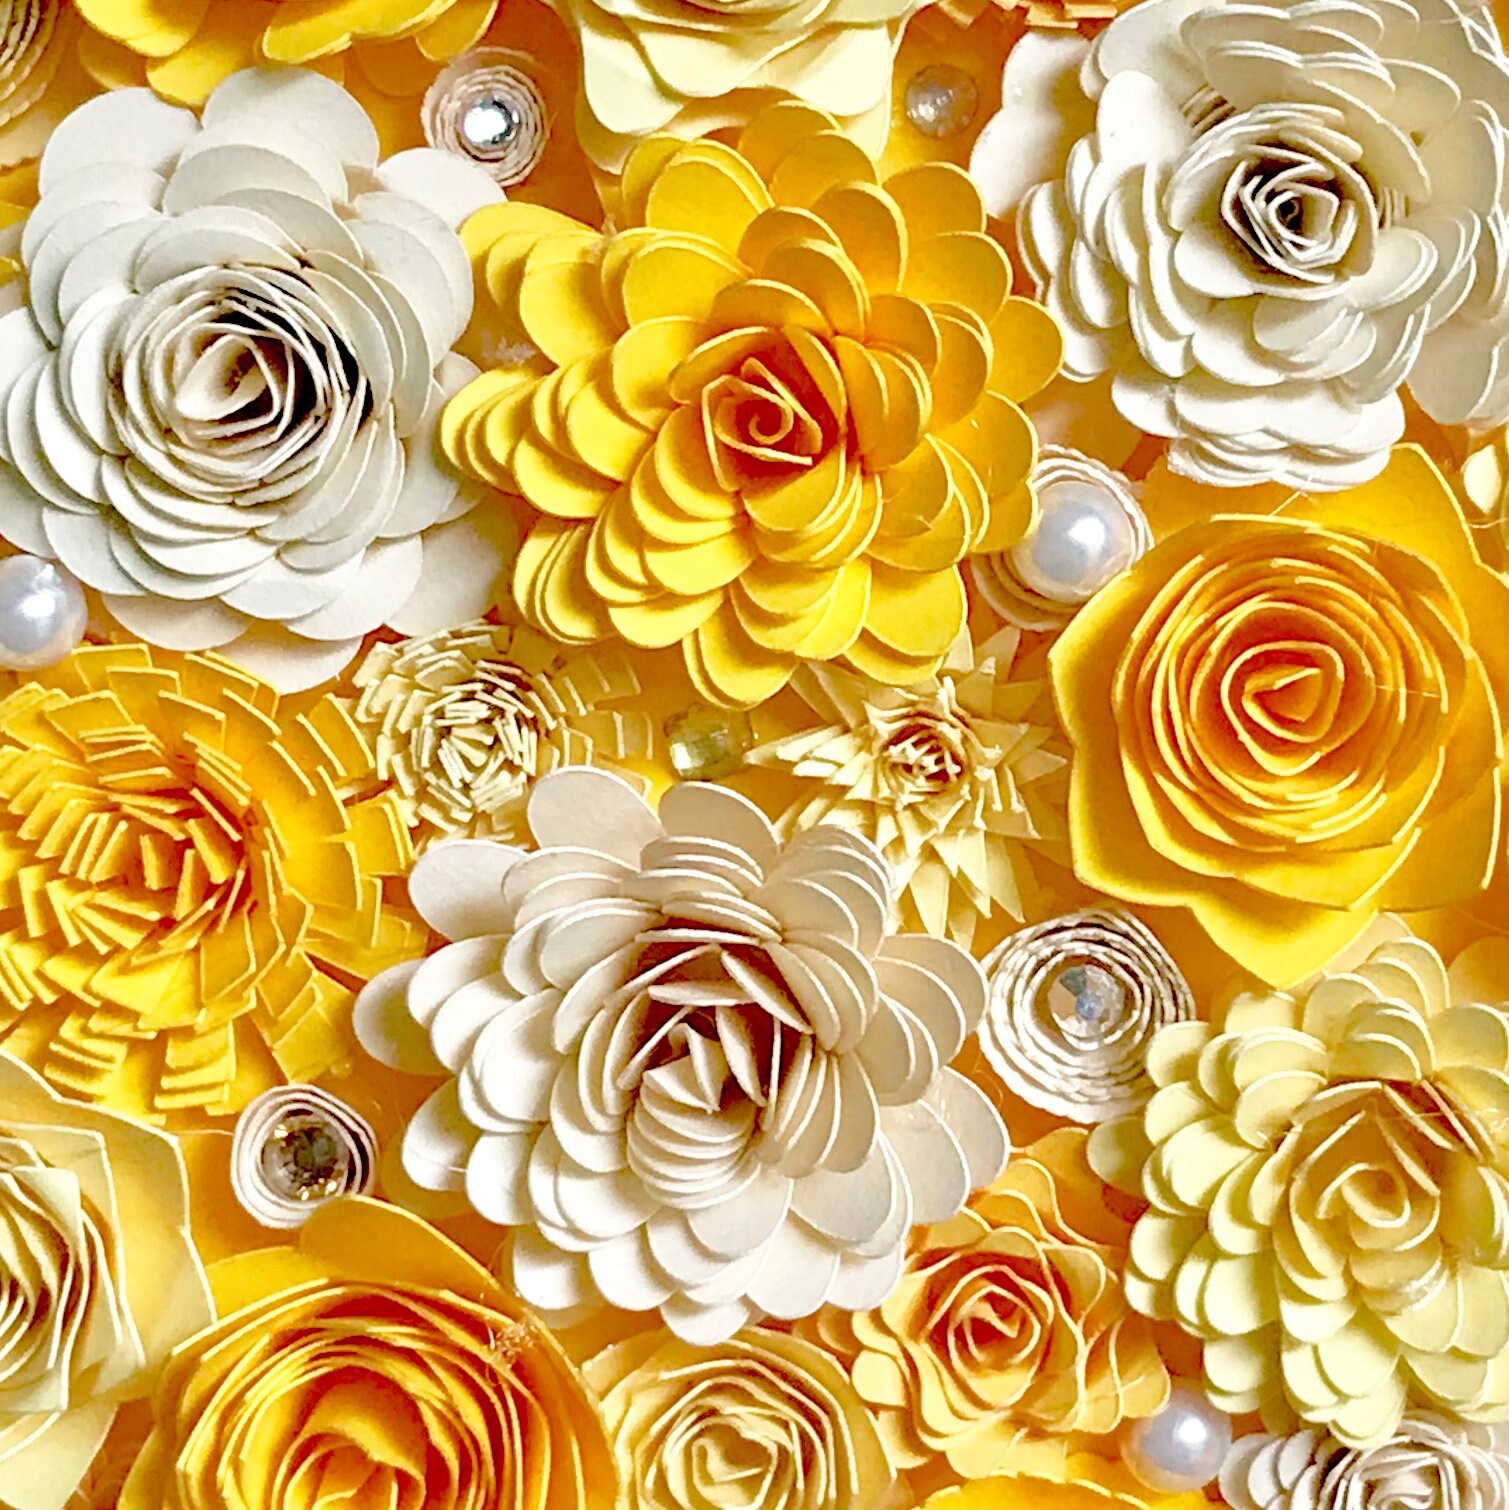 Groovy Bloom Wrapping Paper Rolls  Golden Rule Gallery – GOLDEN RULE  GALLERY